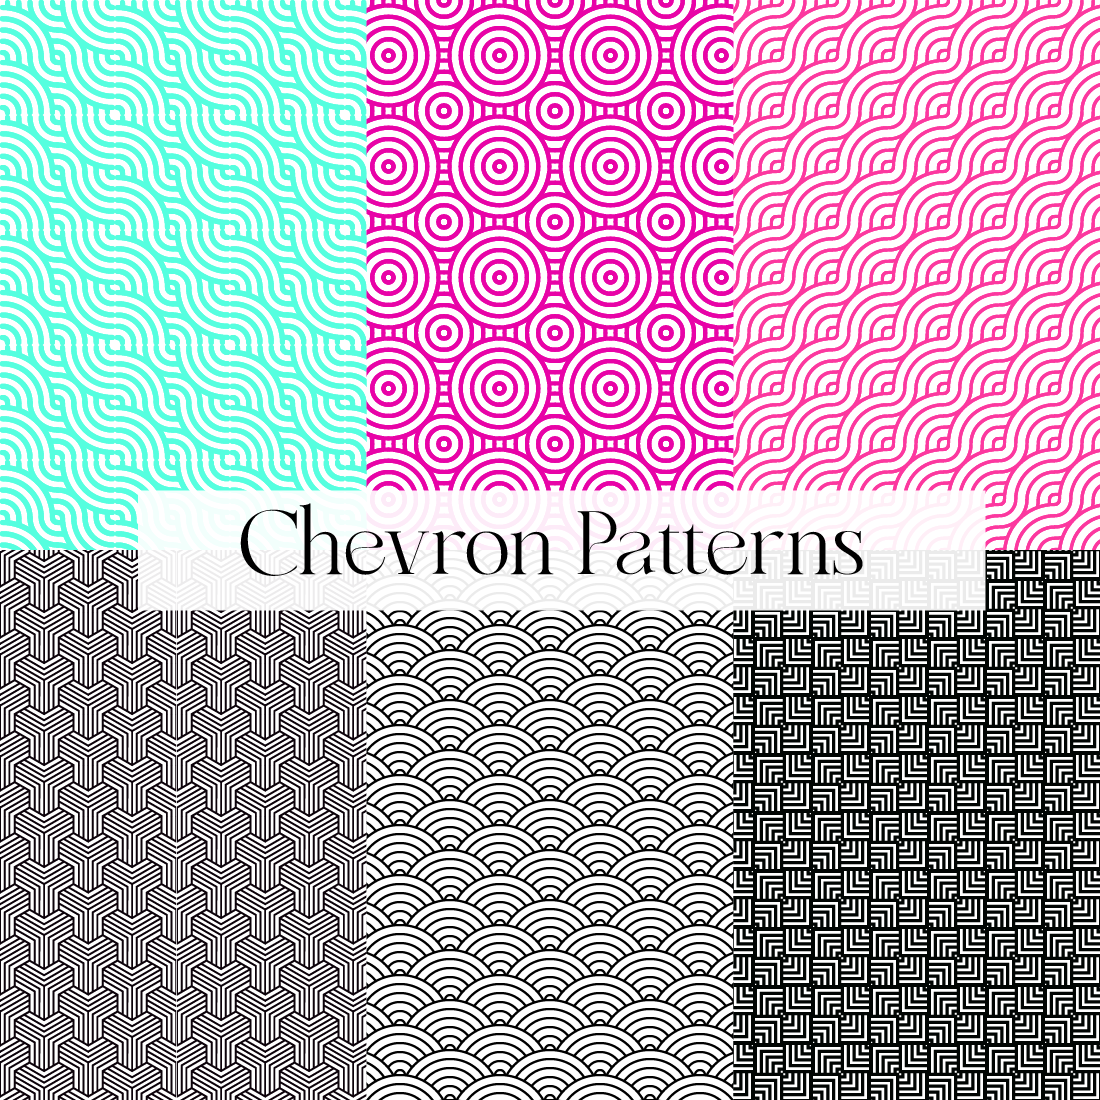 chevron patterns 01